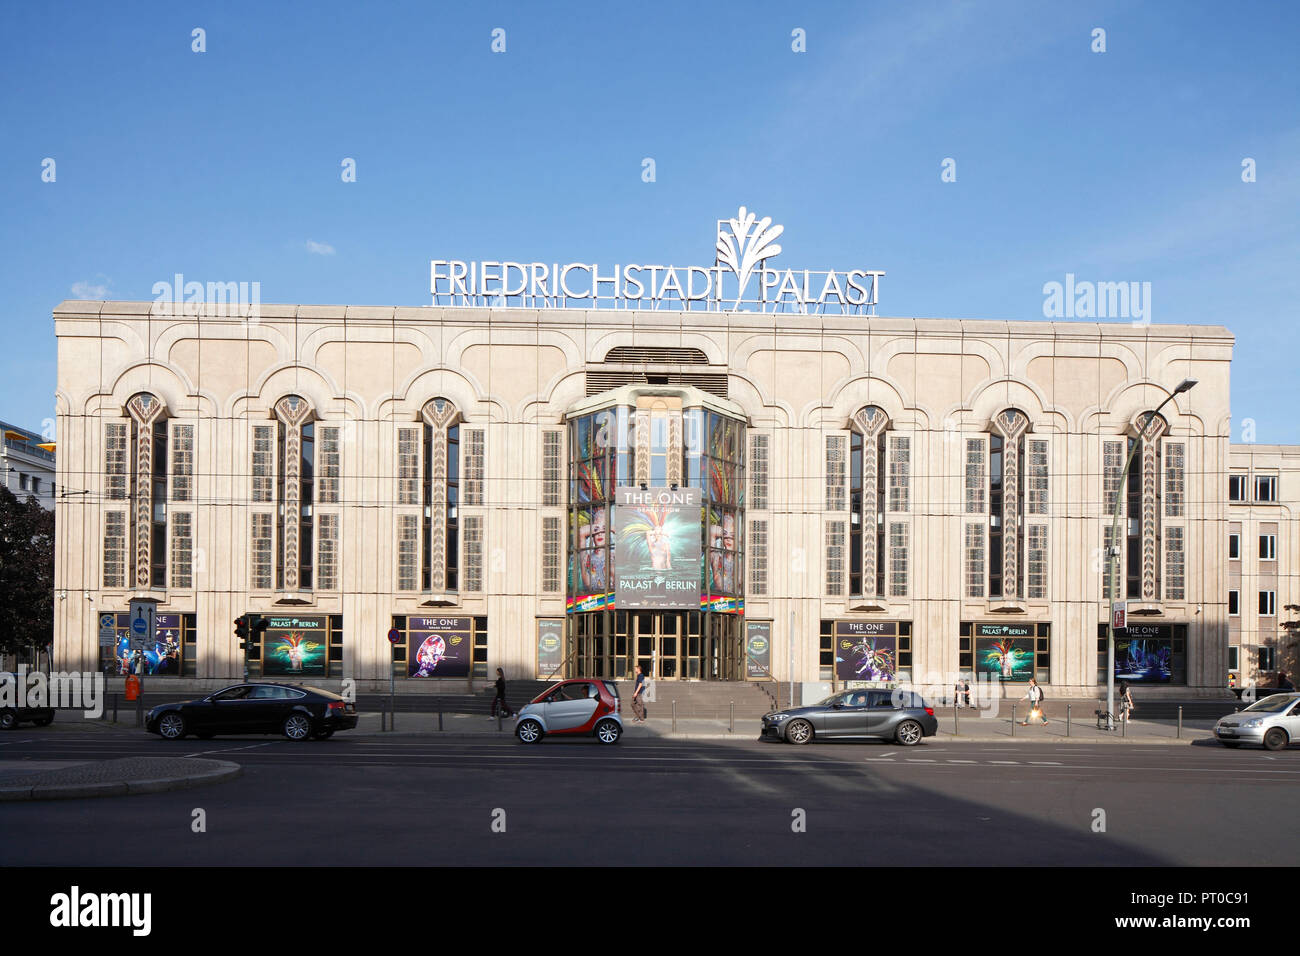 Friedrichstadt-Palast, Revue Theater, Mitte, Berlin, Germany, Europe Stock Photo